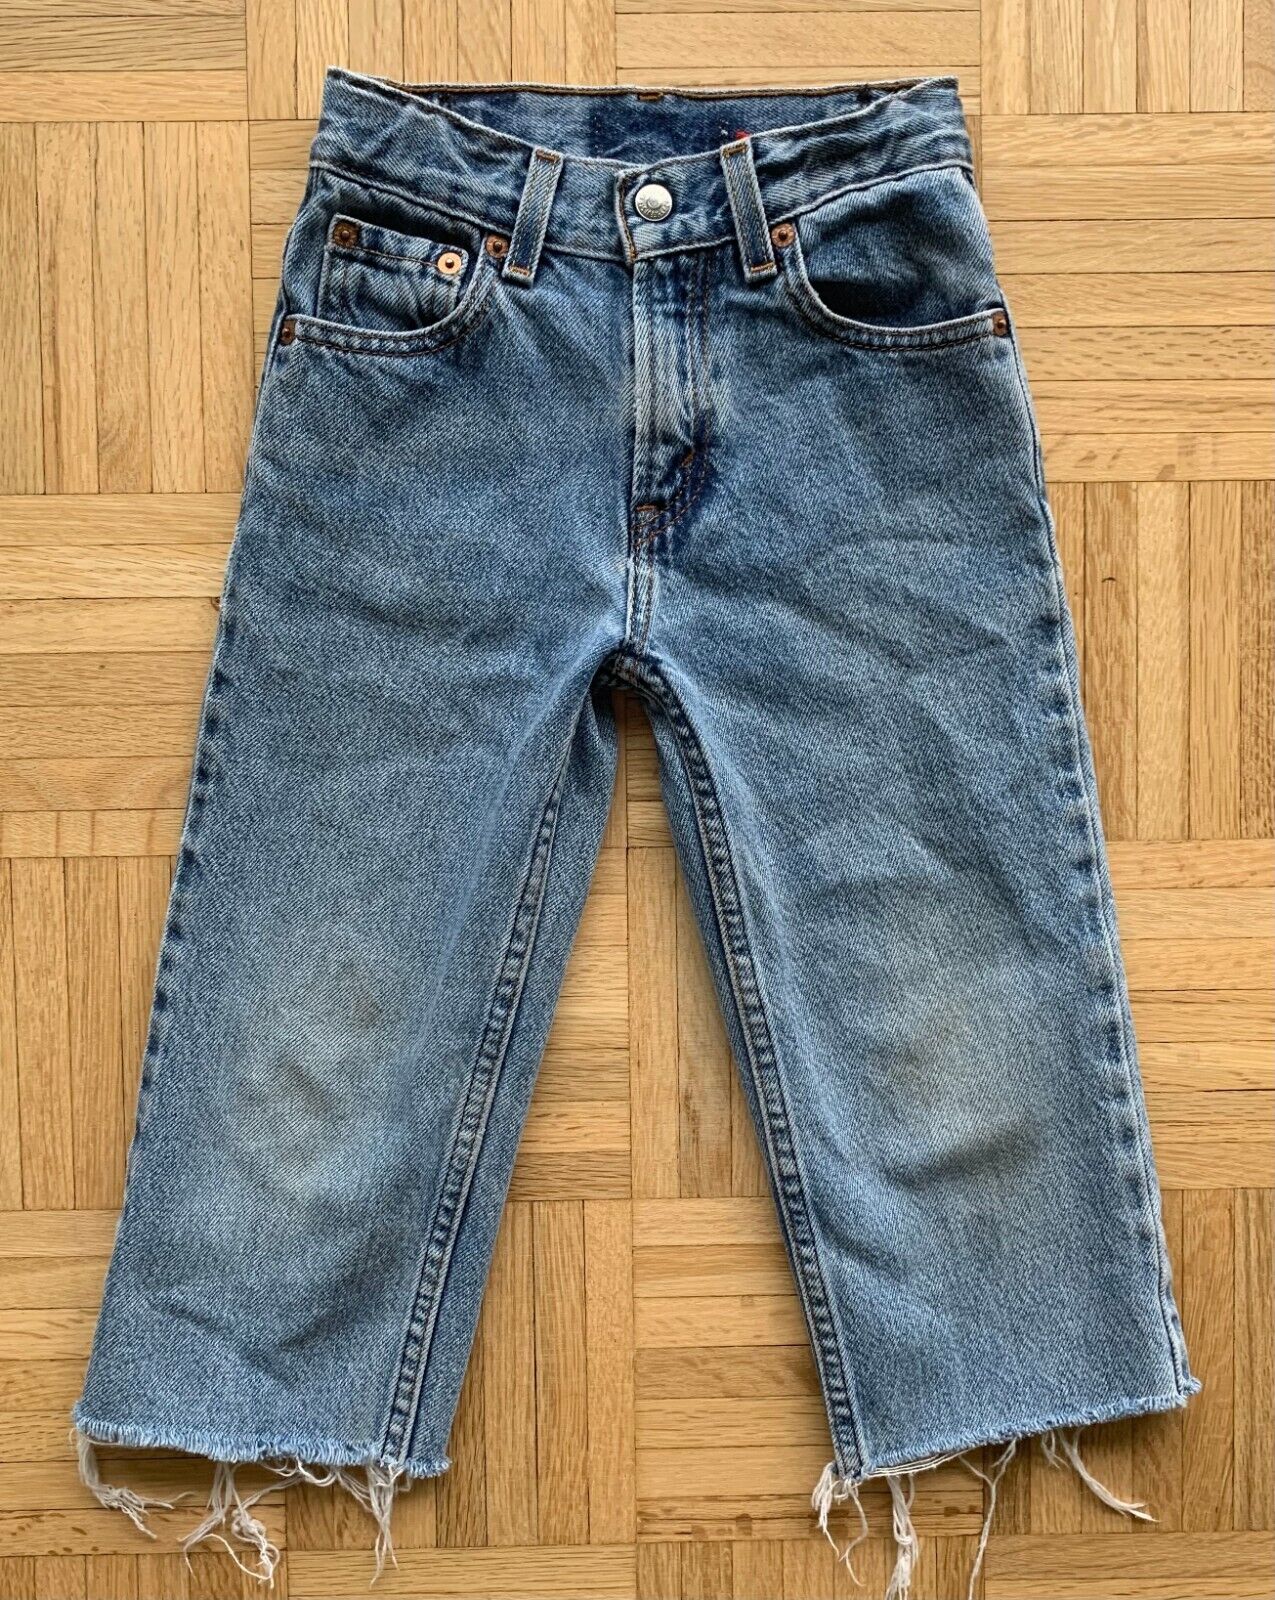 Vintage Levis Relaxed Fit Light Wash Denim Jeans Fits 4t Toddler